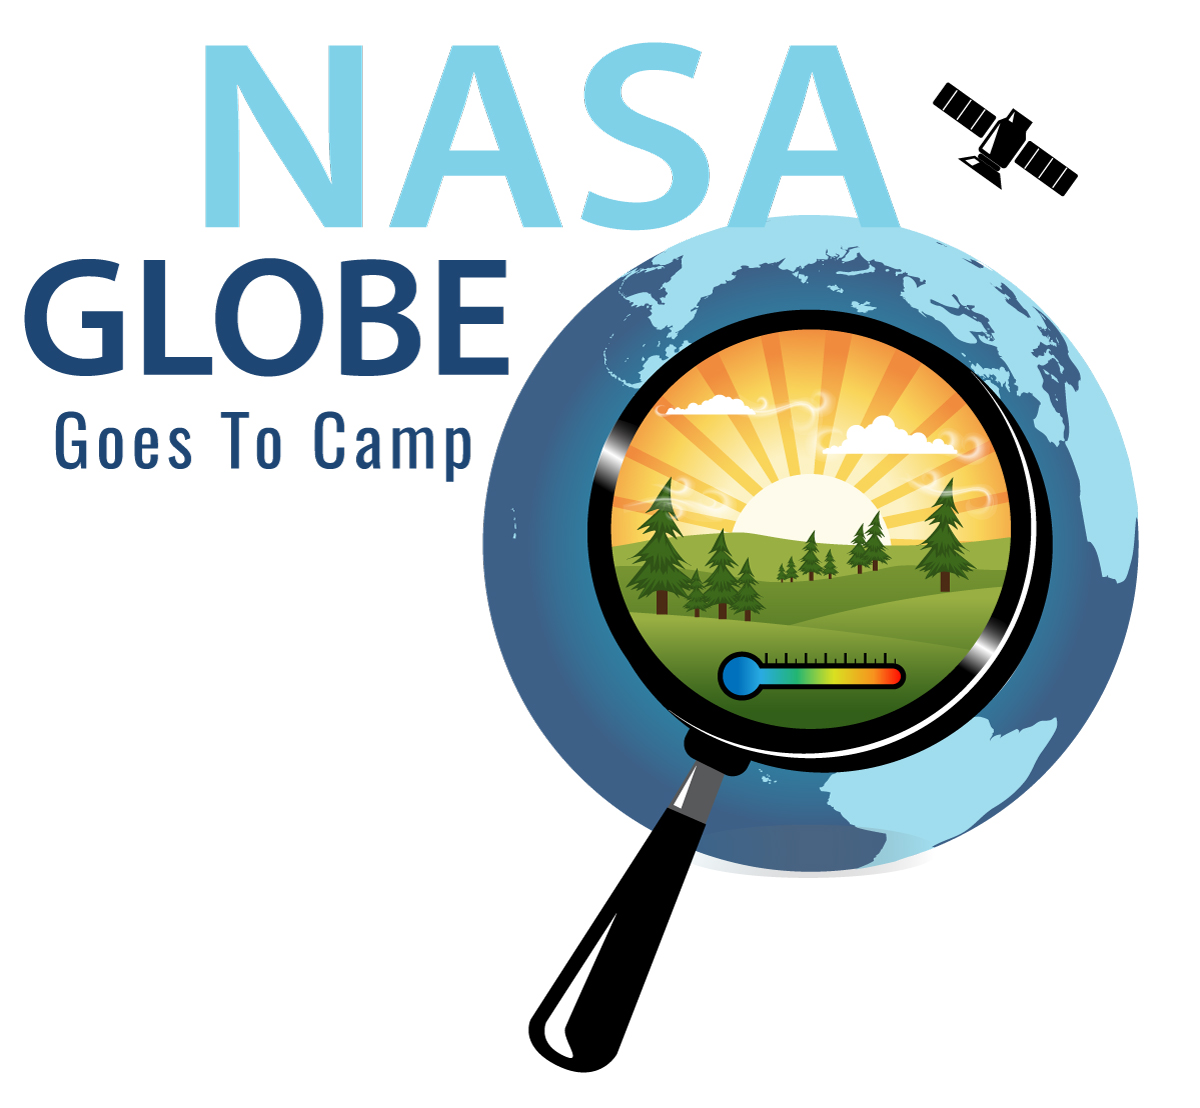 NASA GLOBE Goes to Camp logo